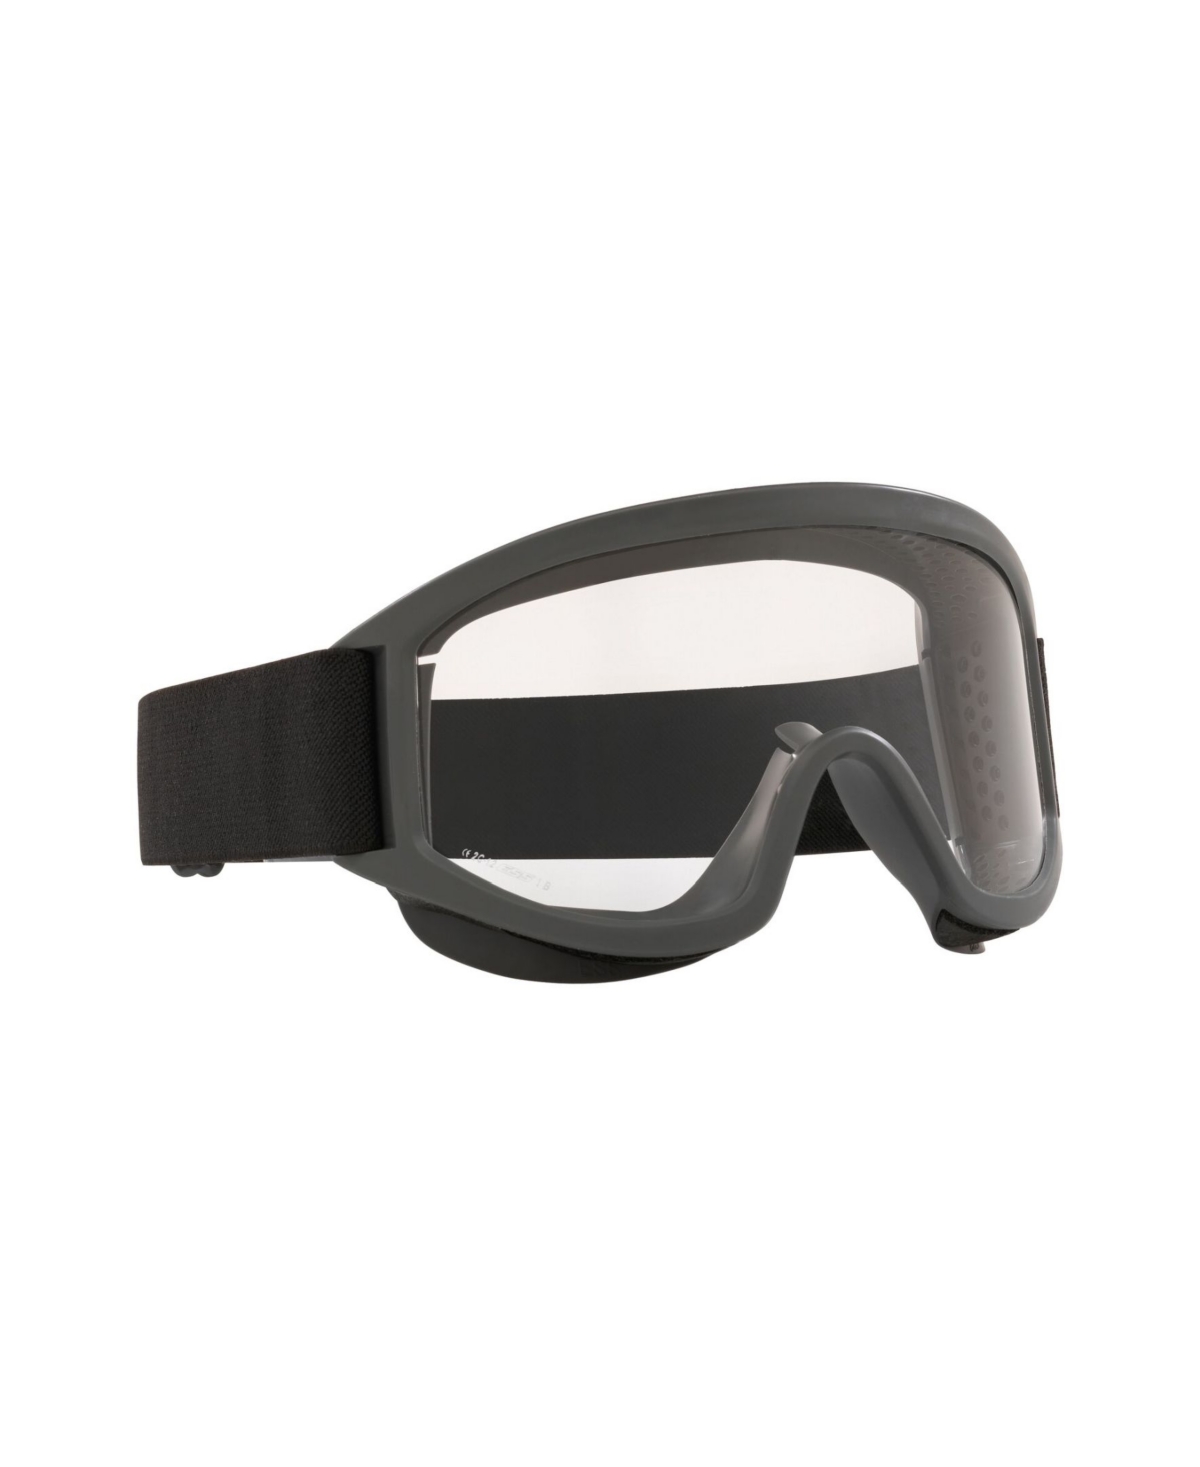 Ppe Safety Goggles, Ess Striker Ppe - Black